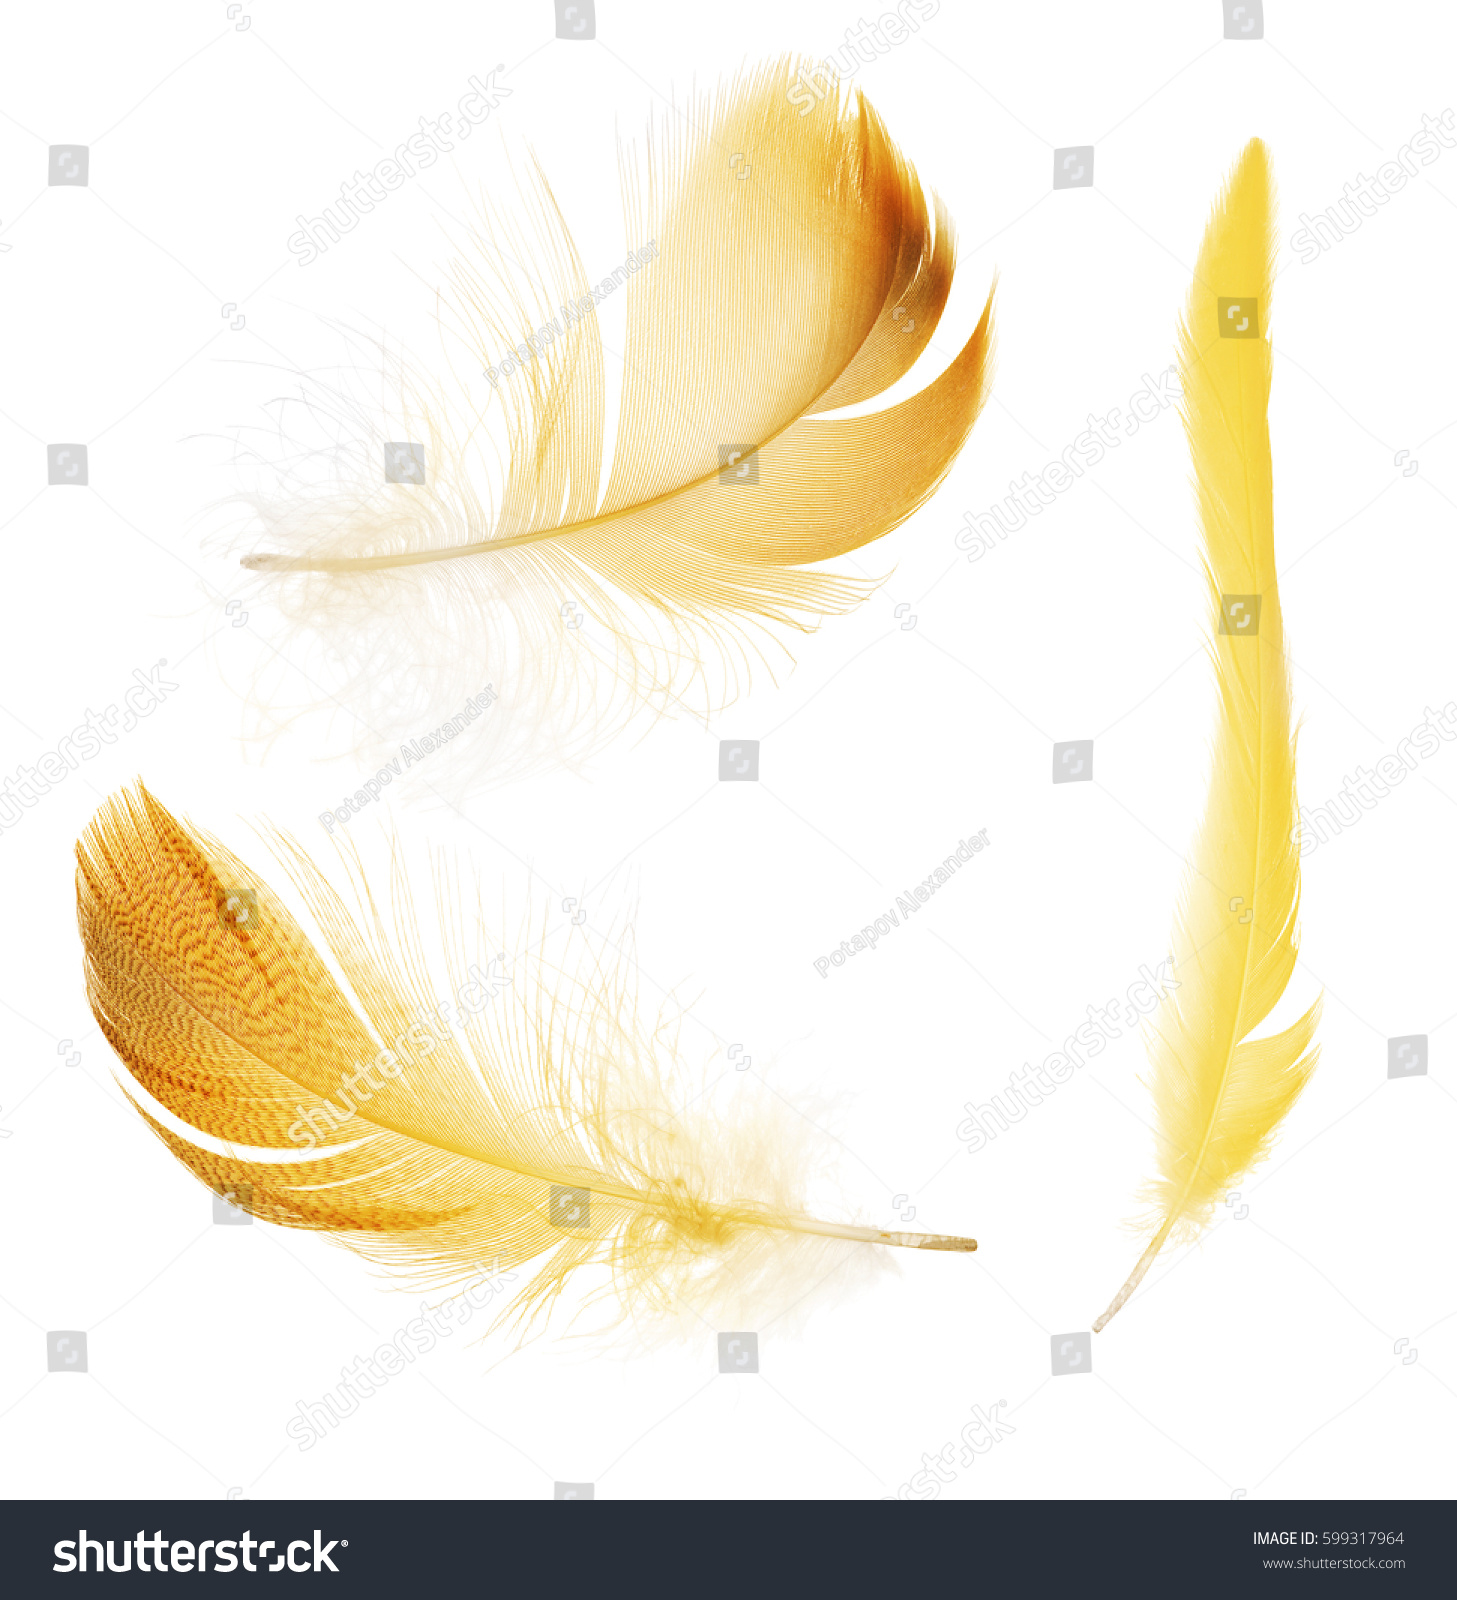 set of feathers isolated on white background #599317964